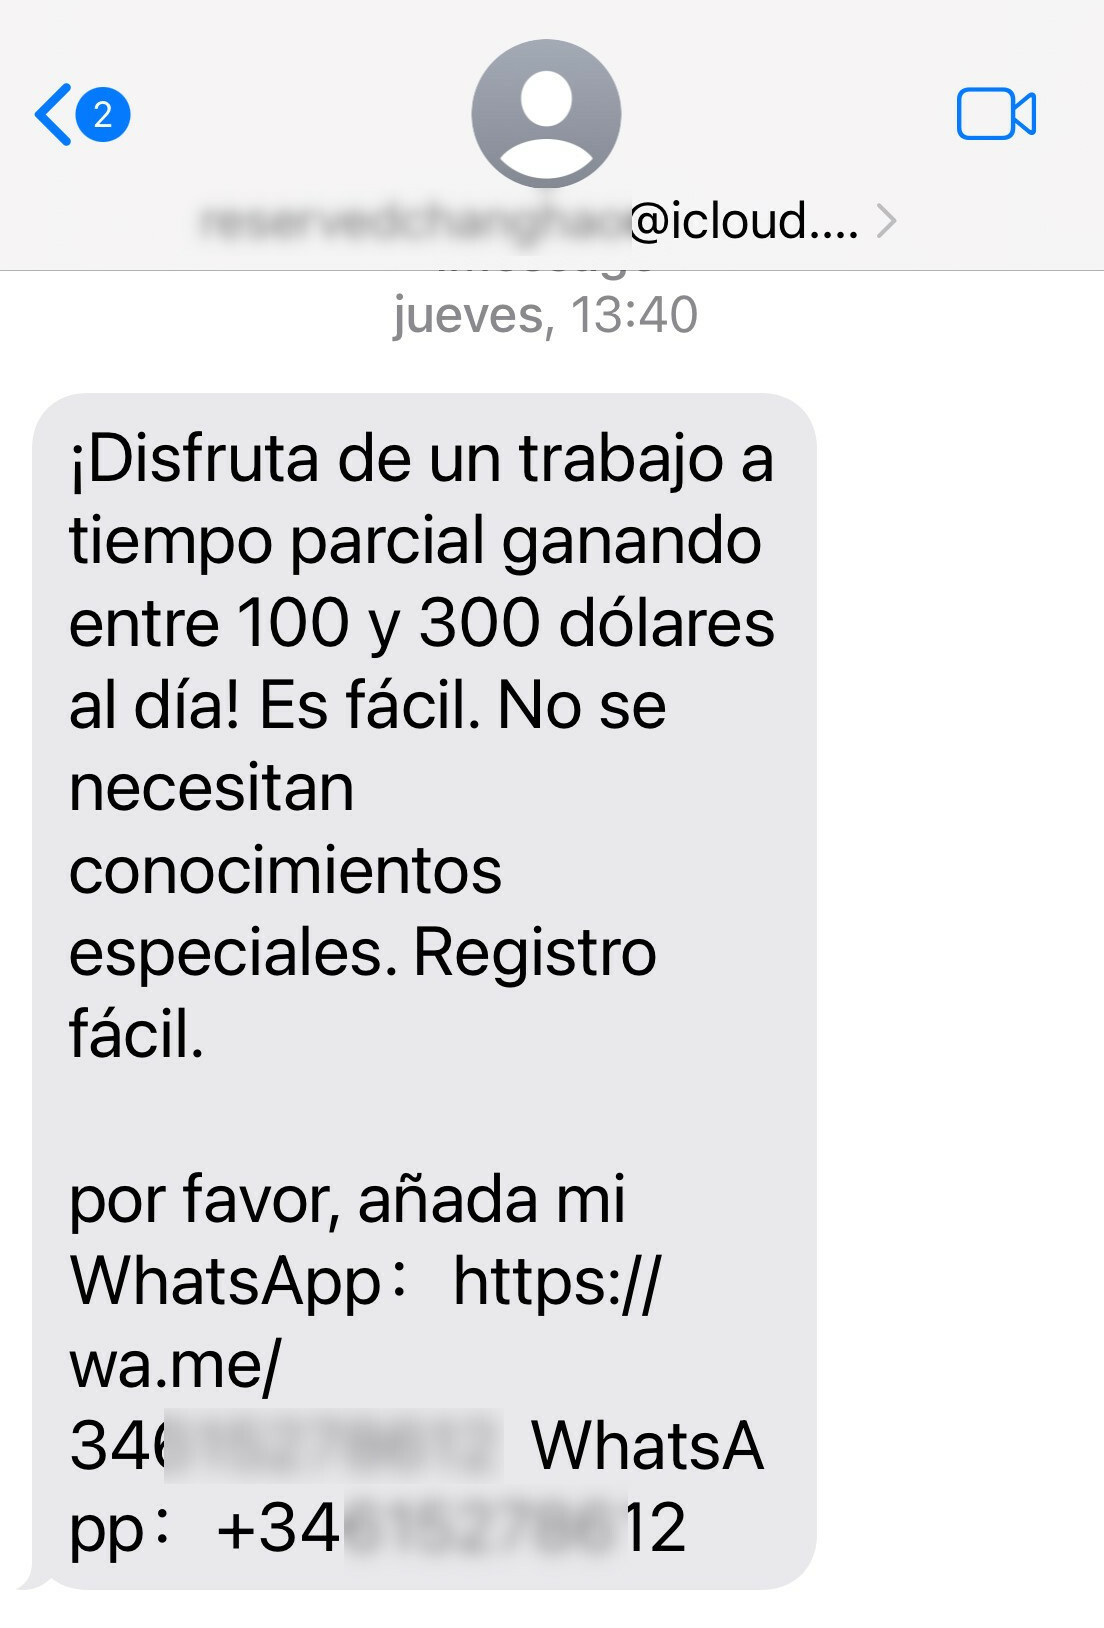 Ejemplo de SMS fraudulento detectado con falsa oferta de empleo